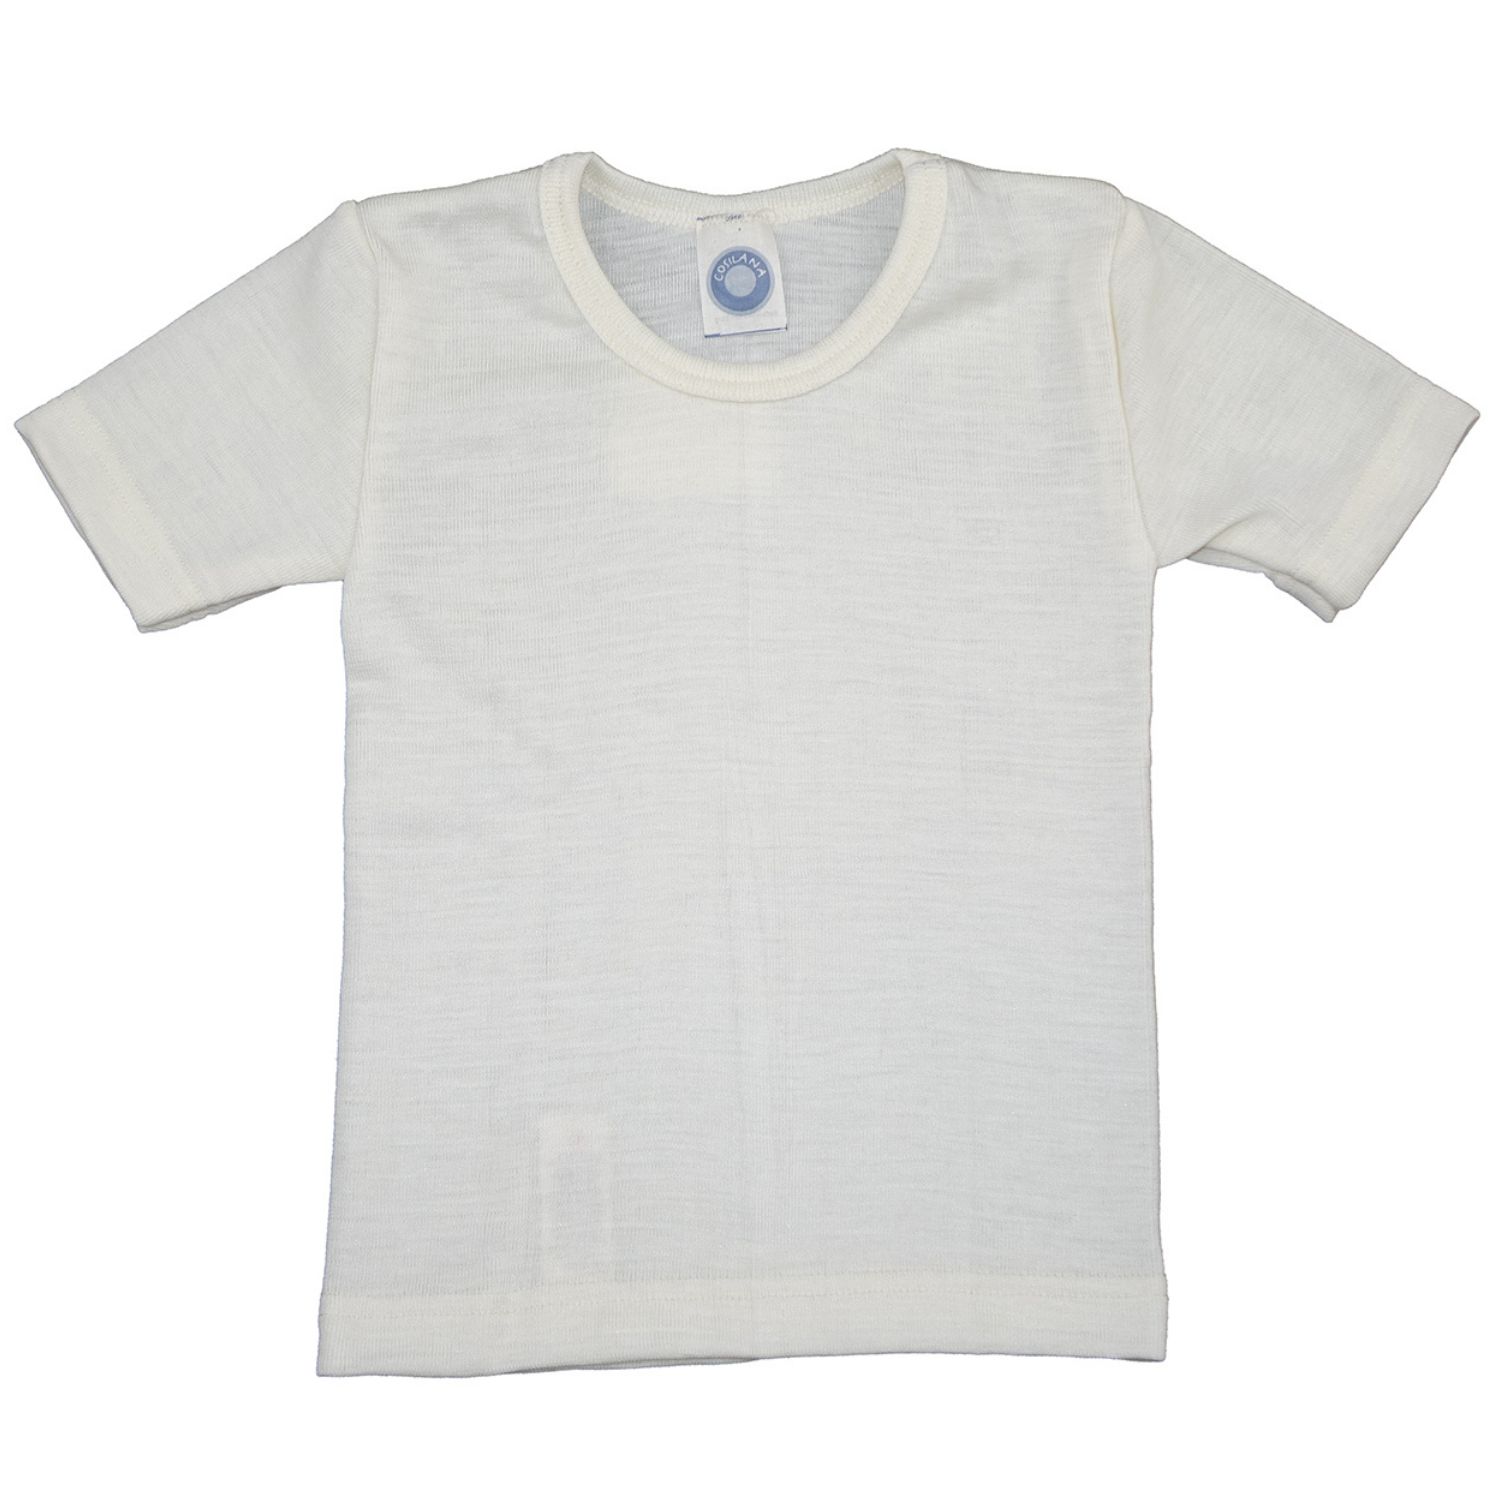 Cosilana Kinder-Unterhemd (Kurzarm) aus Wolle/Seide